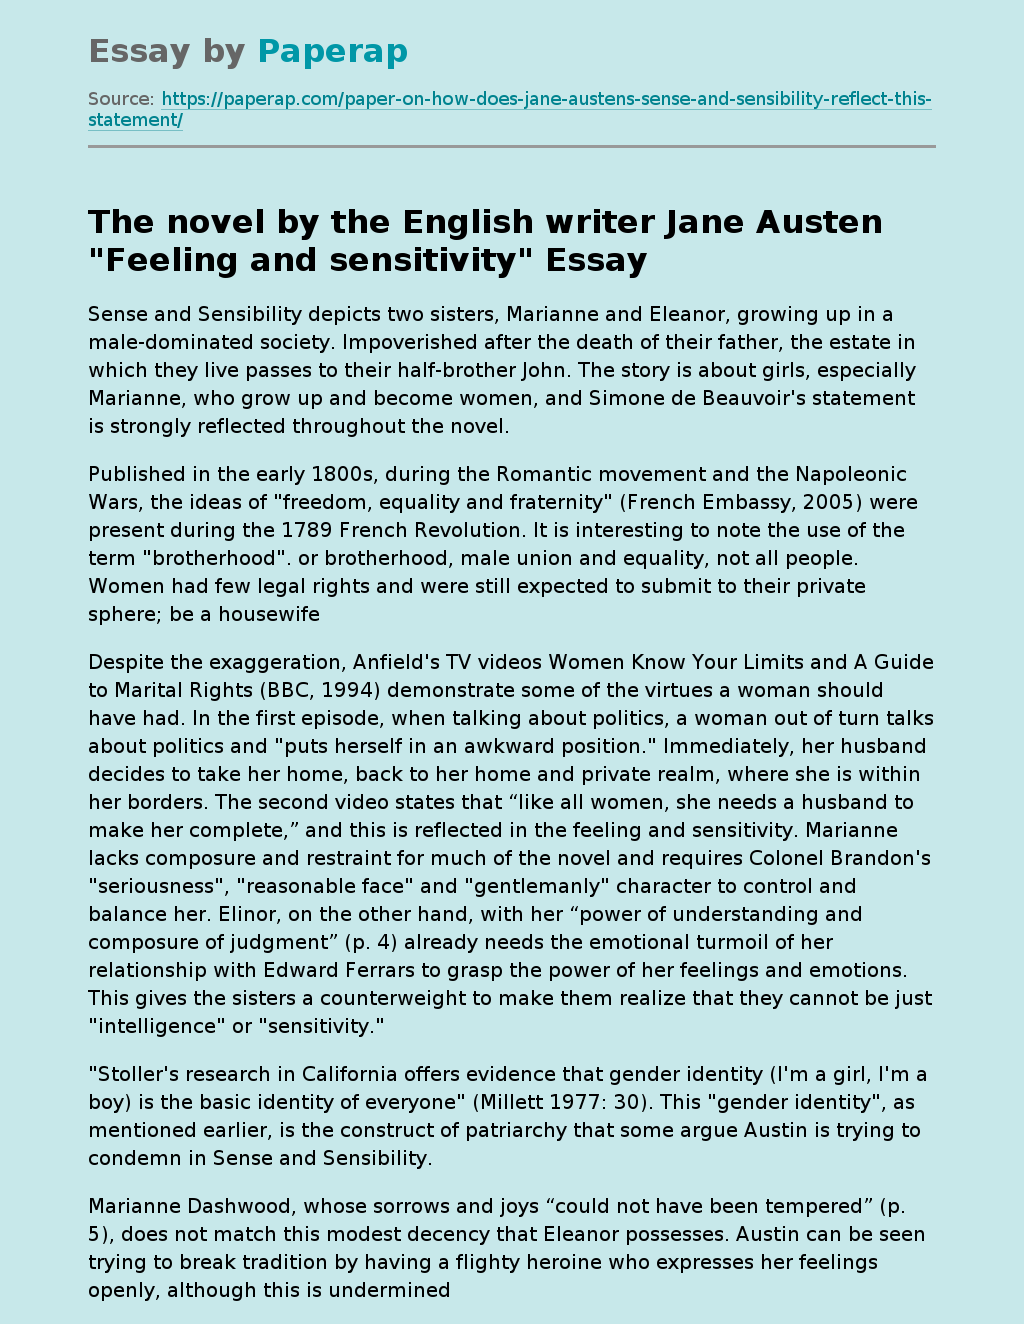 The novel by the English writer Jane Austen "Feeling and sensitivity"